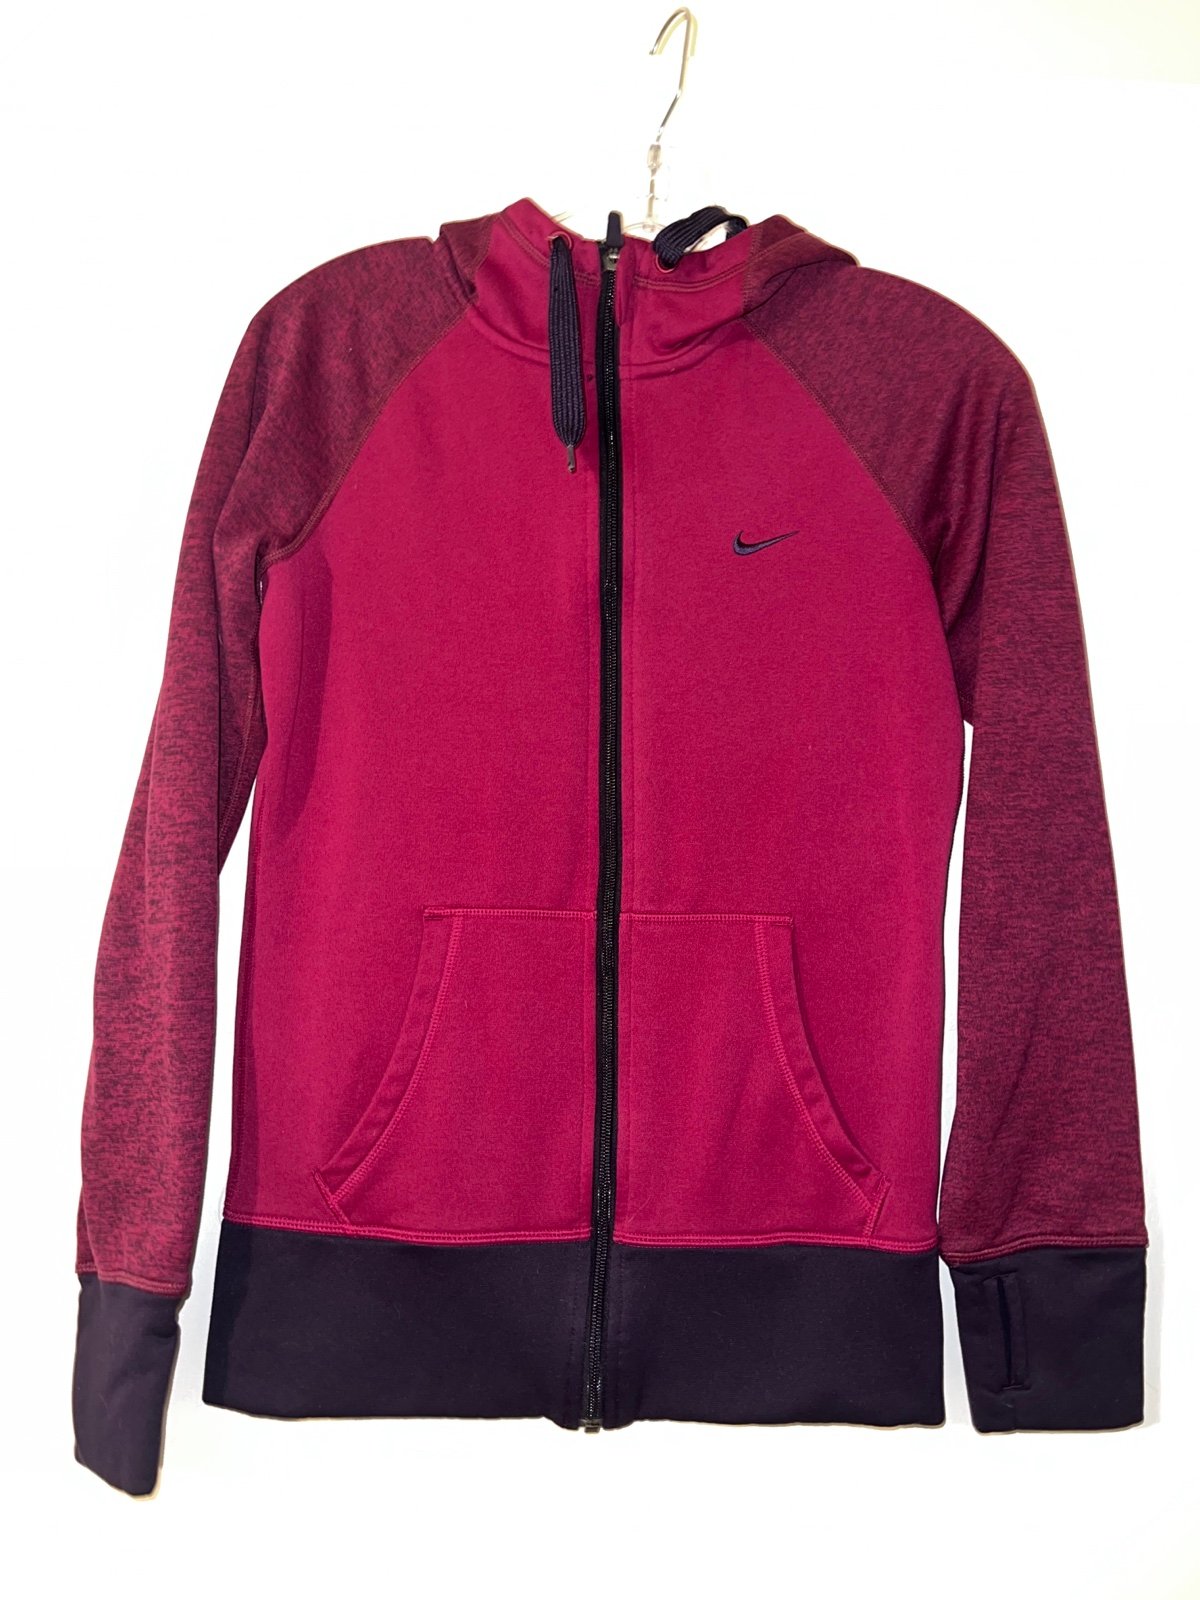 Perfect Nike zip up hoodie jacket, women’s size XS jIPn